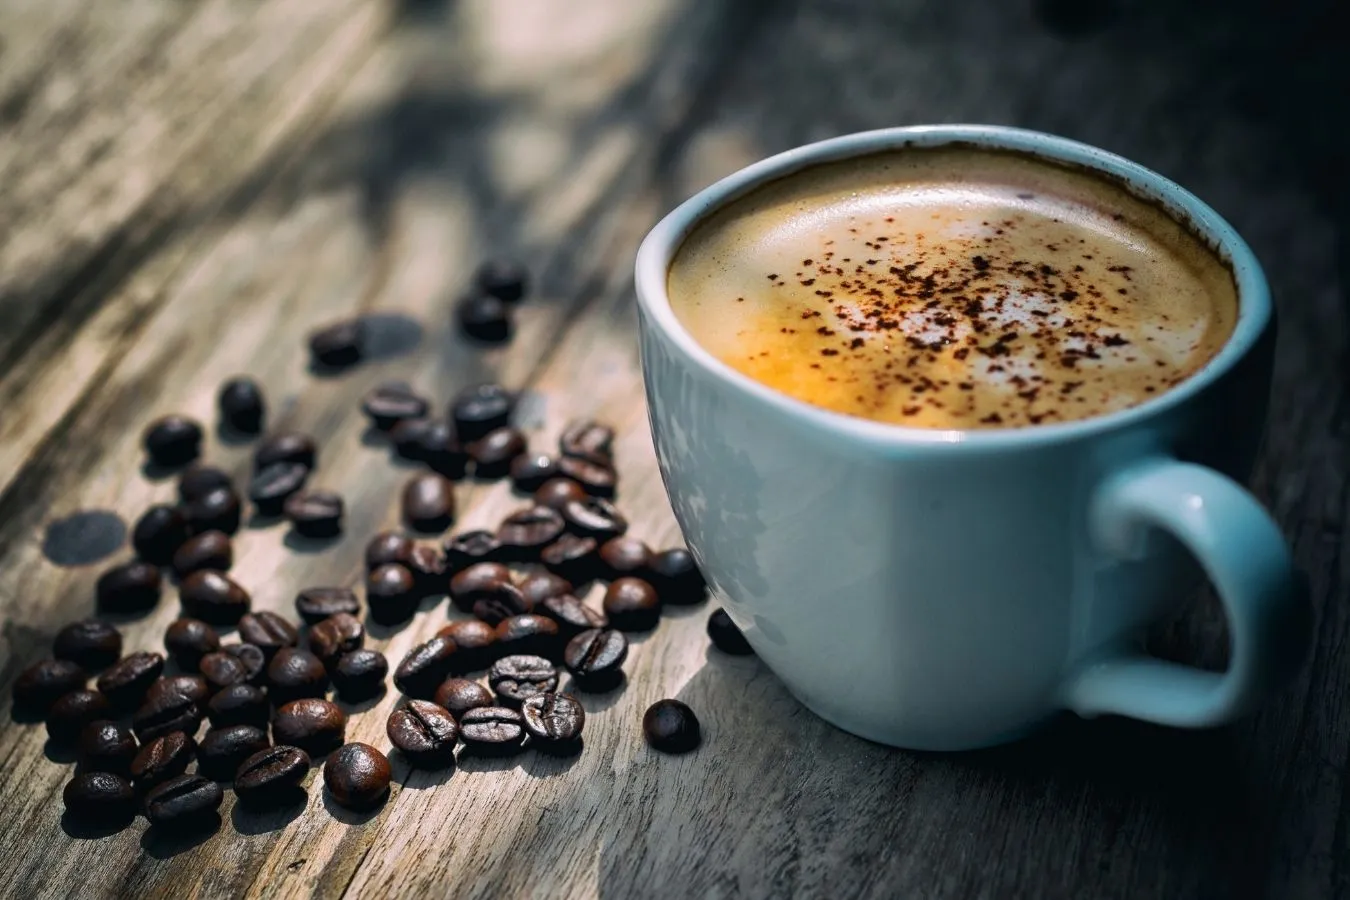 Enjoy Coffee With The Five Senses